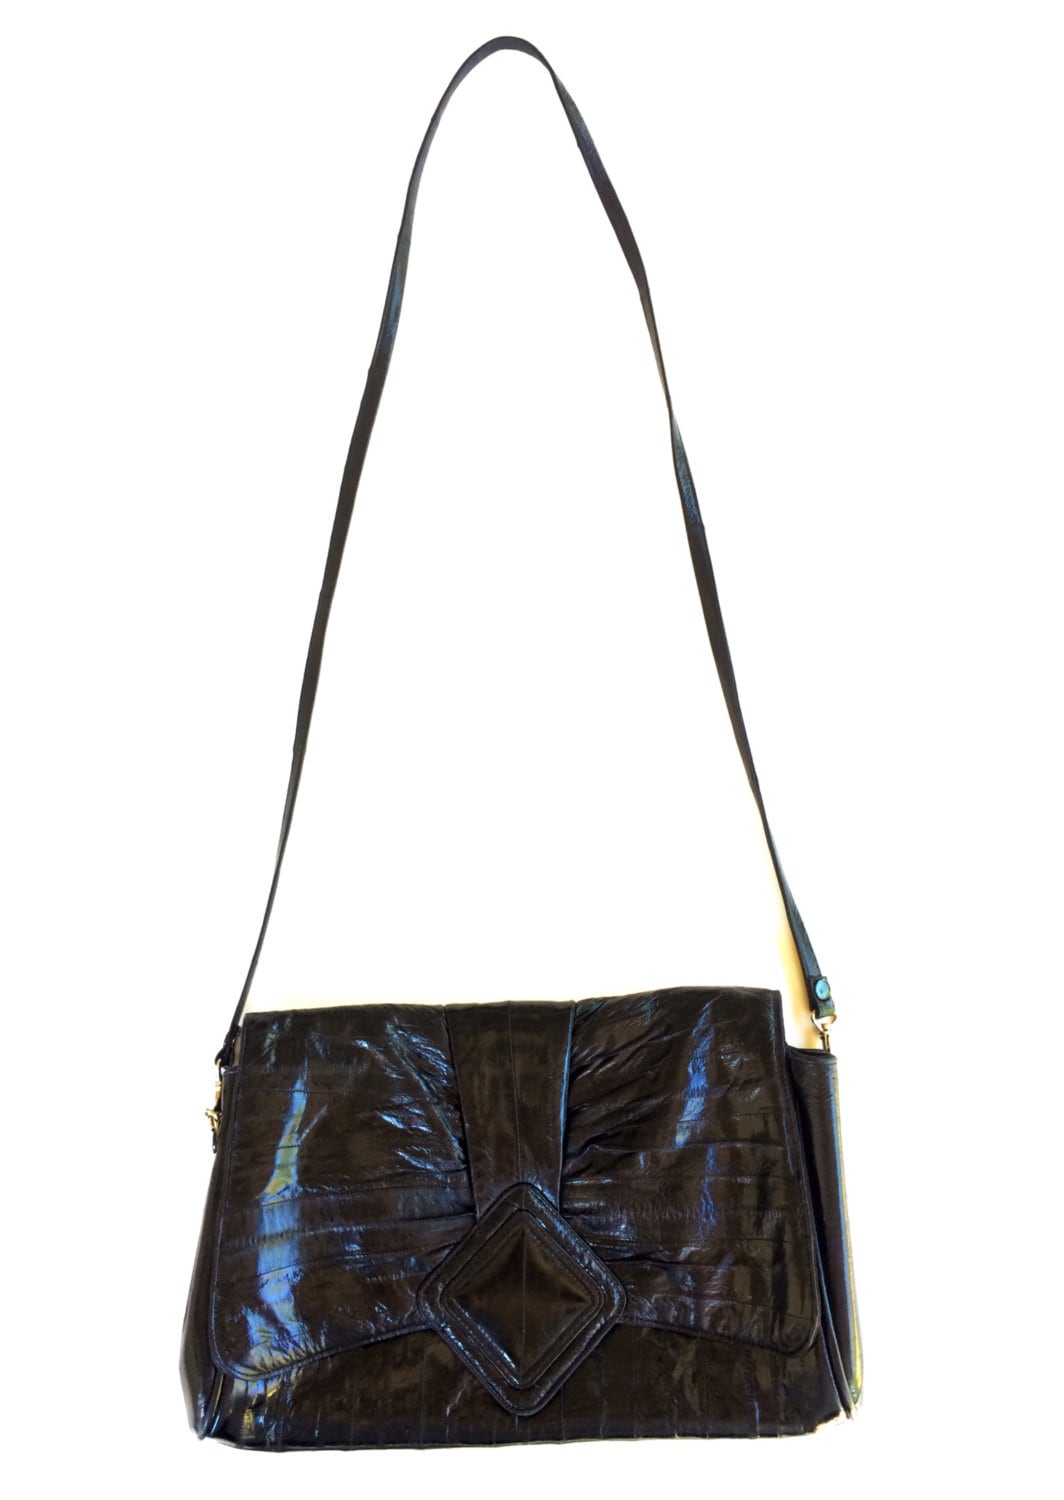 Black Eel Skin Handbag Black Eelskin Clutch - Etsy